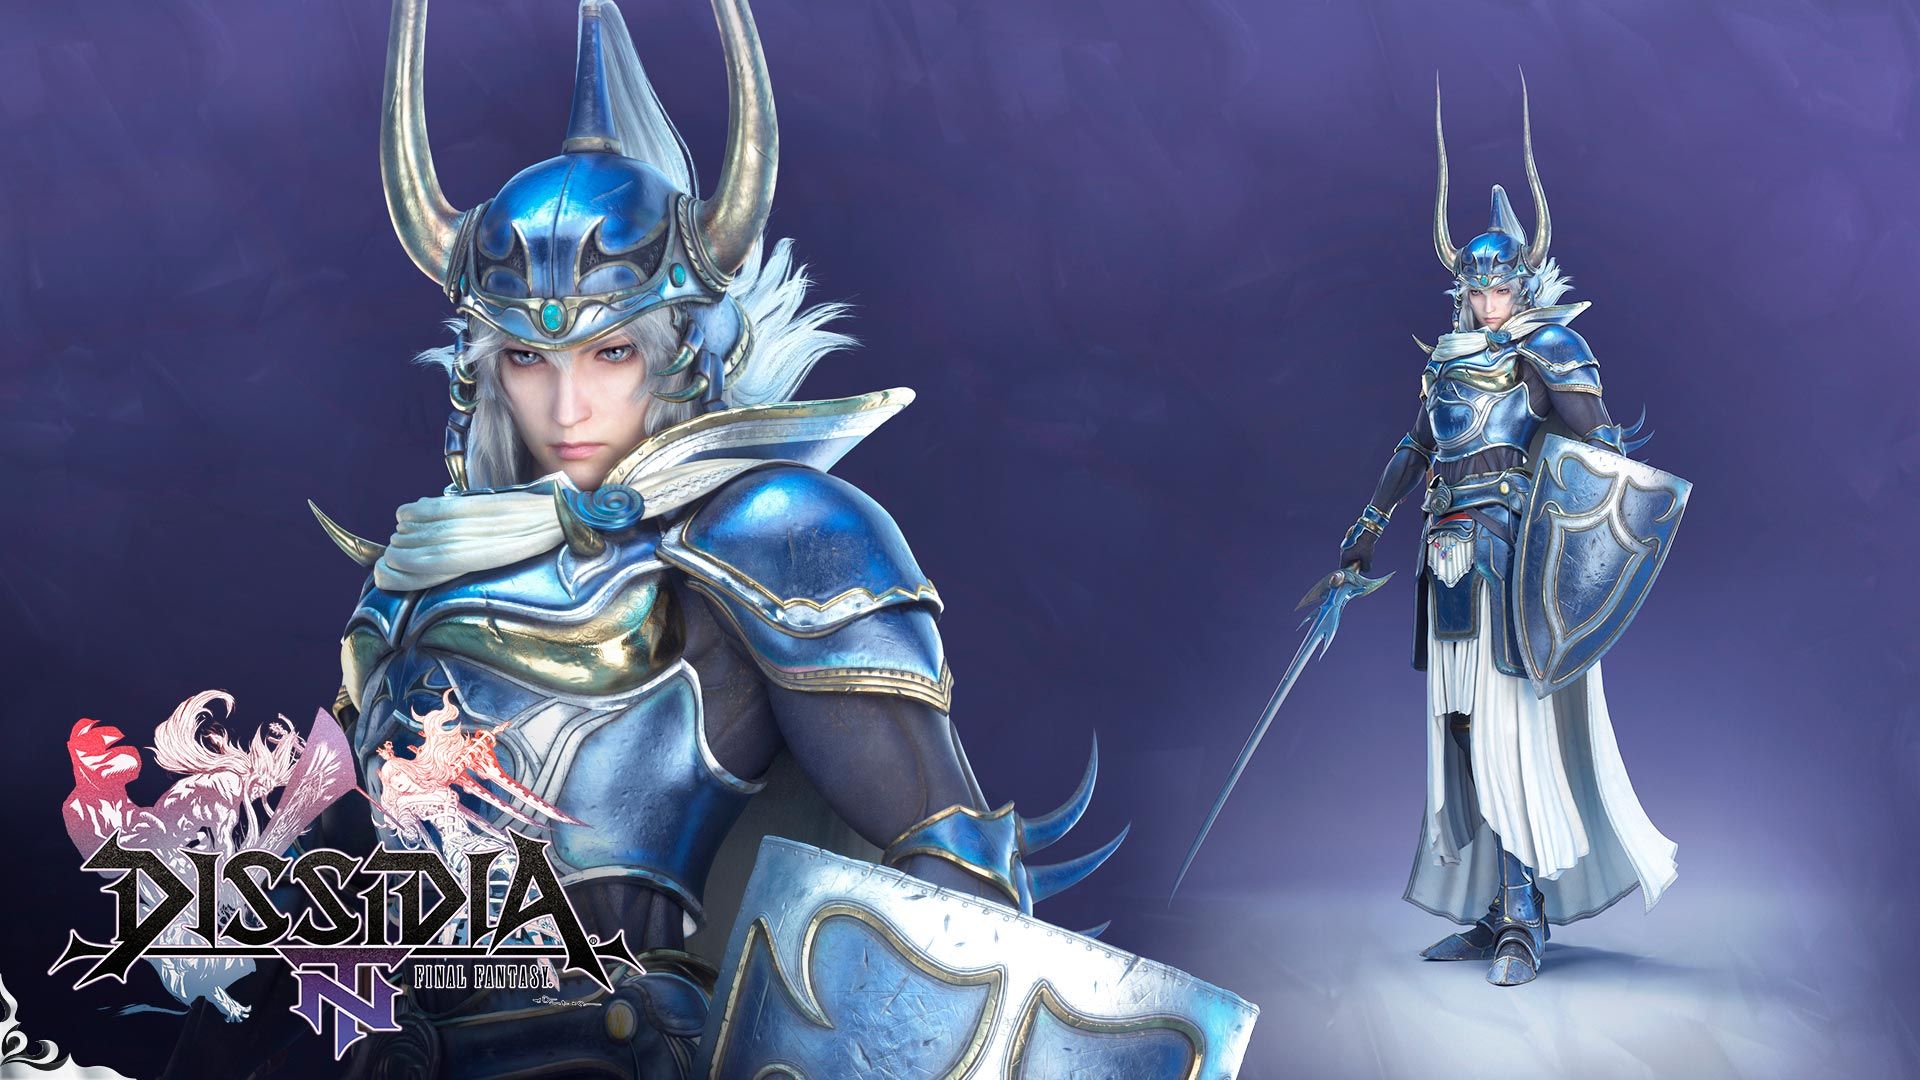 Video Game Dissidia Final Fantasy NT Final Fantasy Warrior Of Light HD Wallpaper Background Image. Final fantasy, Final fantasy characters, Final fantasy art